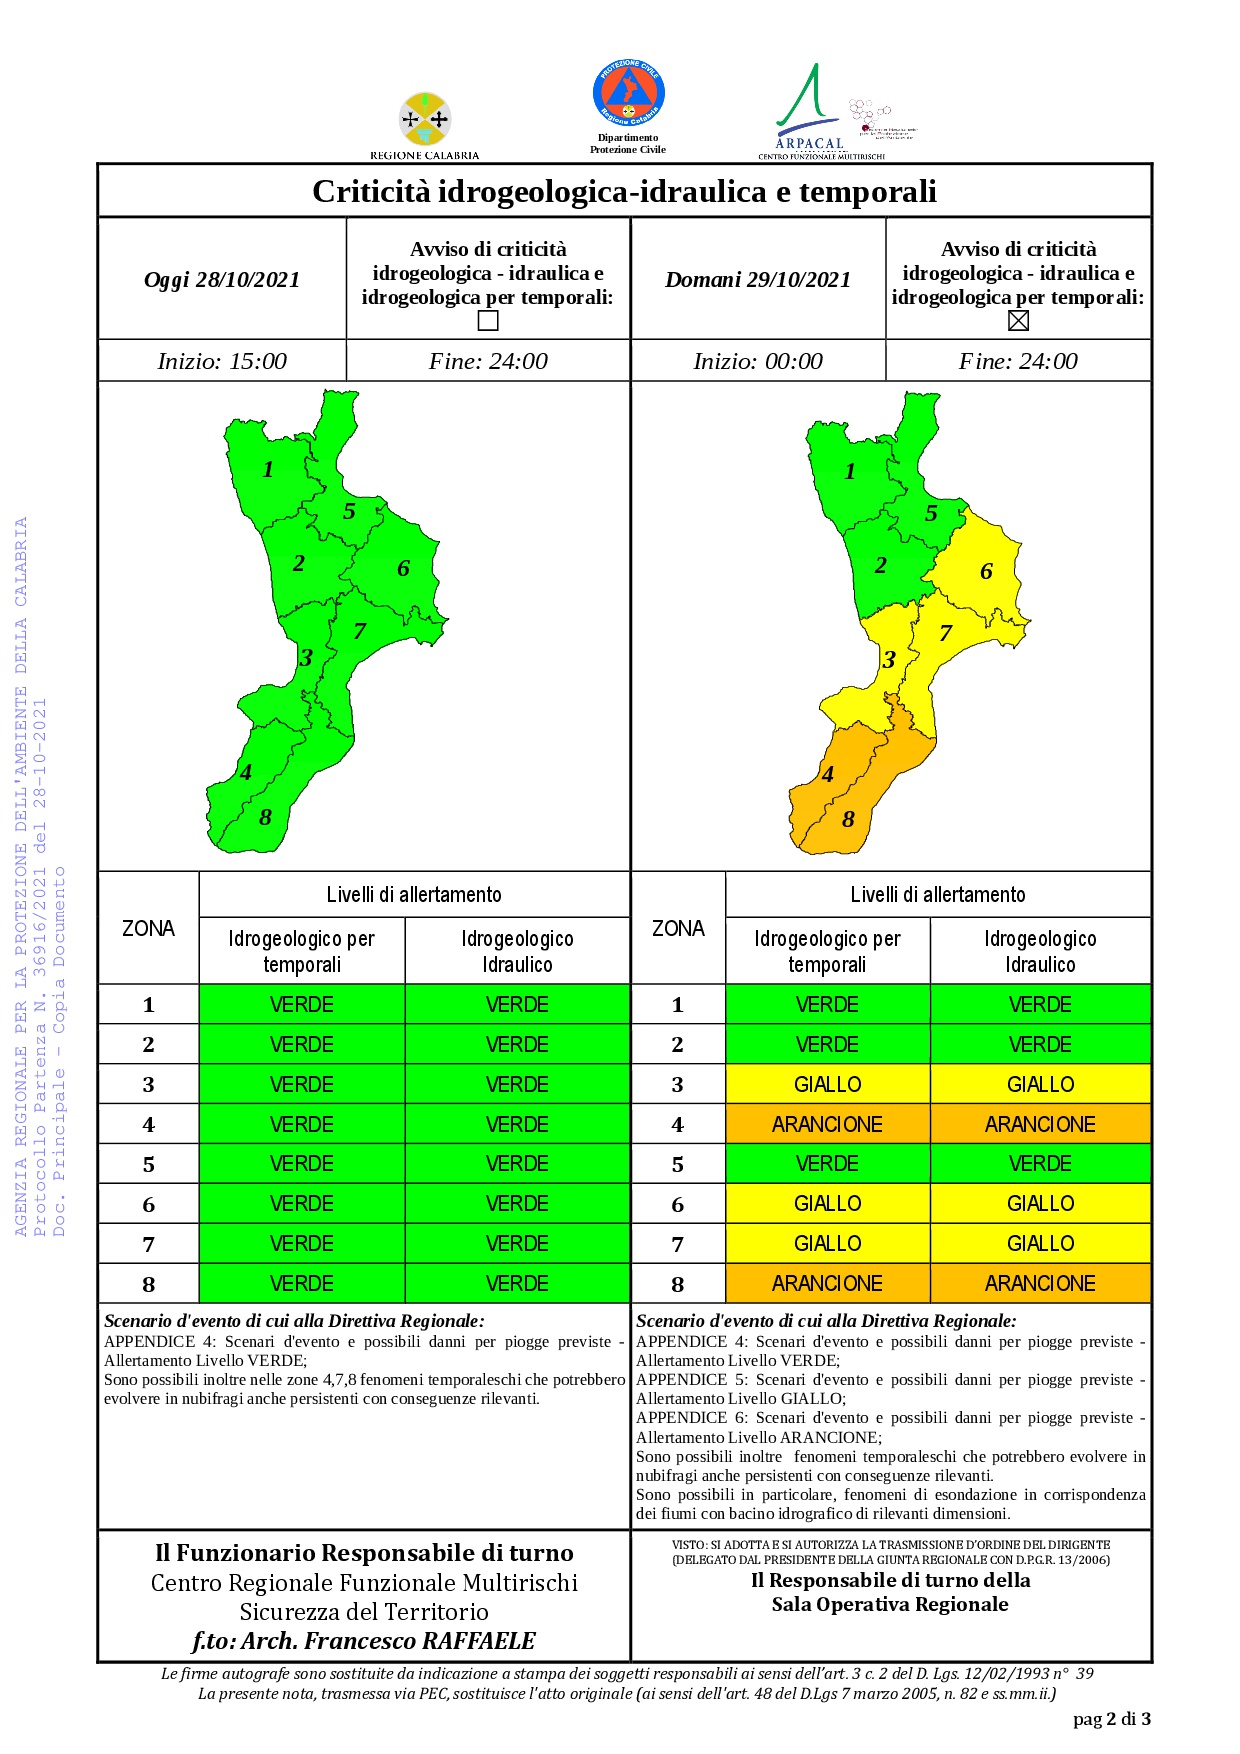 Criticità idrogeologica-idraulica e temporali in Calabria 28-10-2021